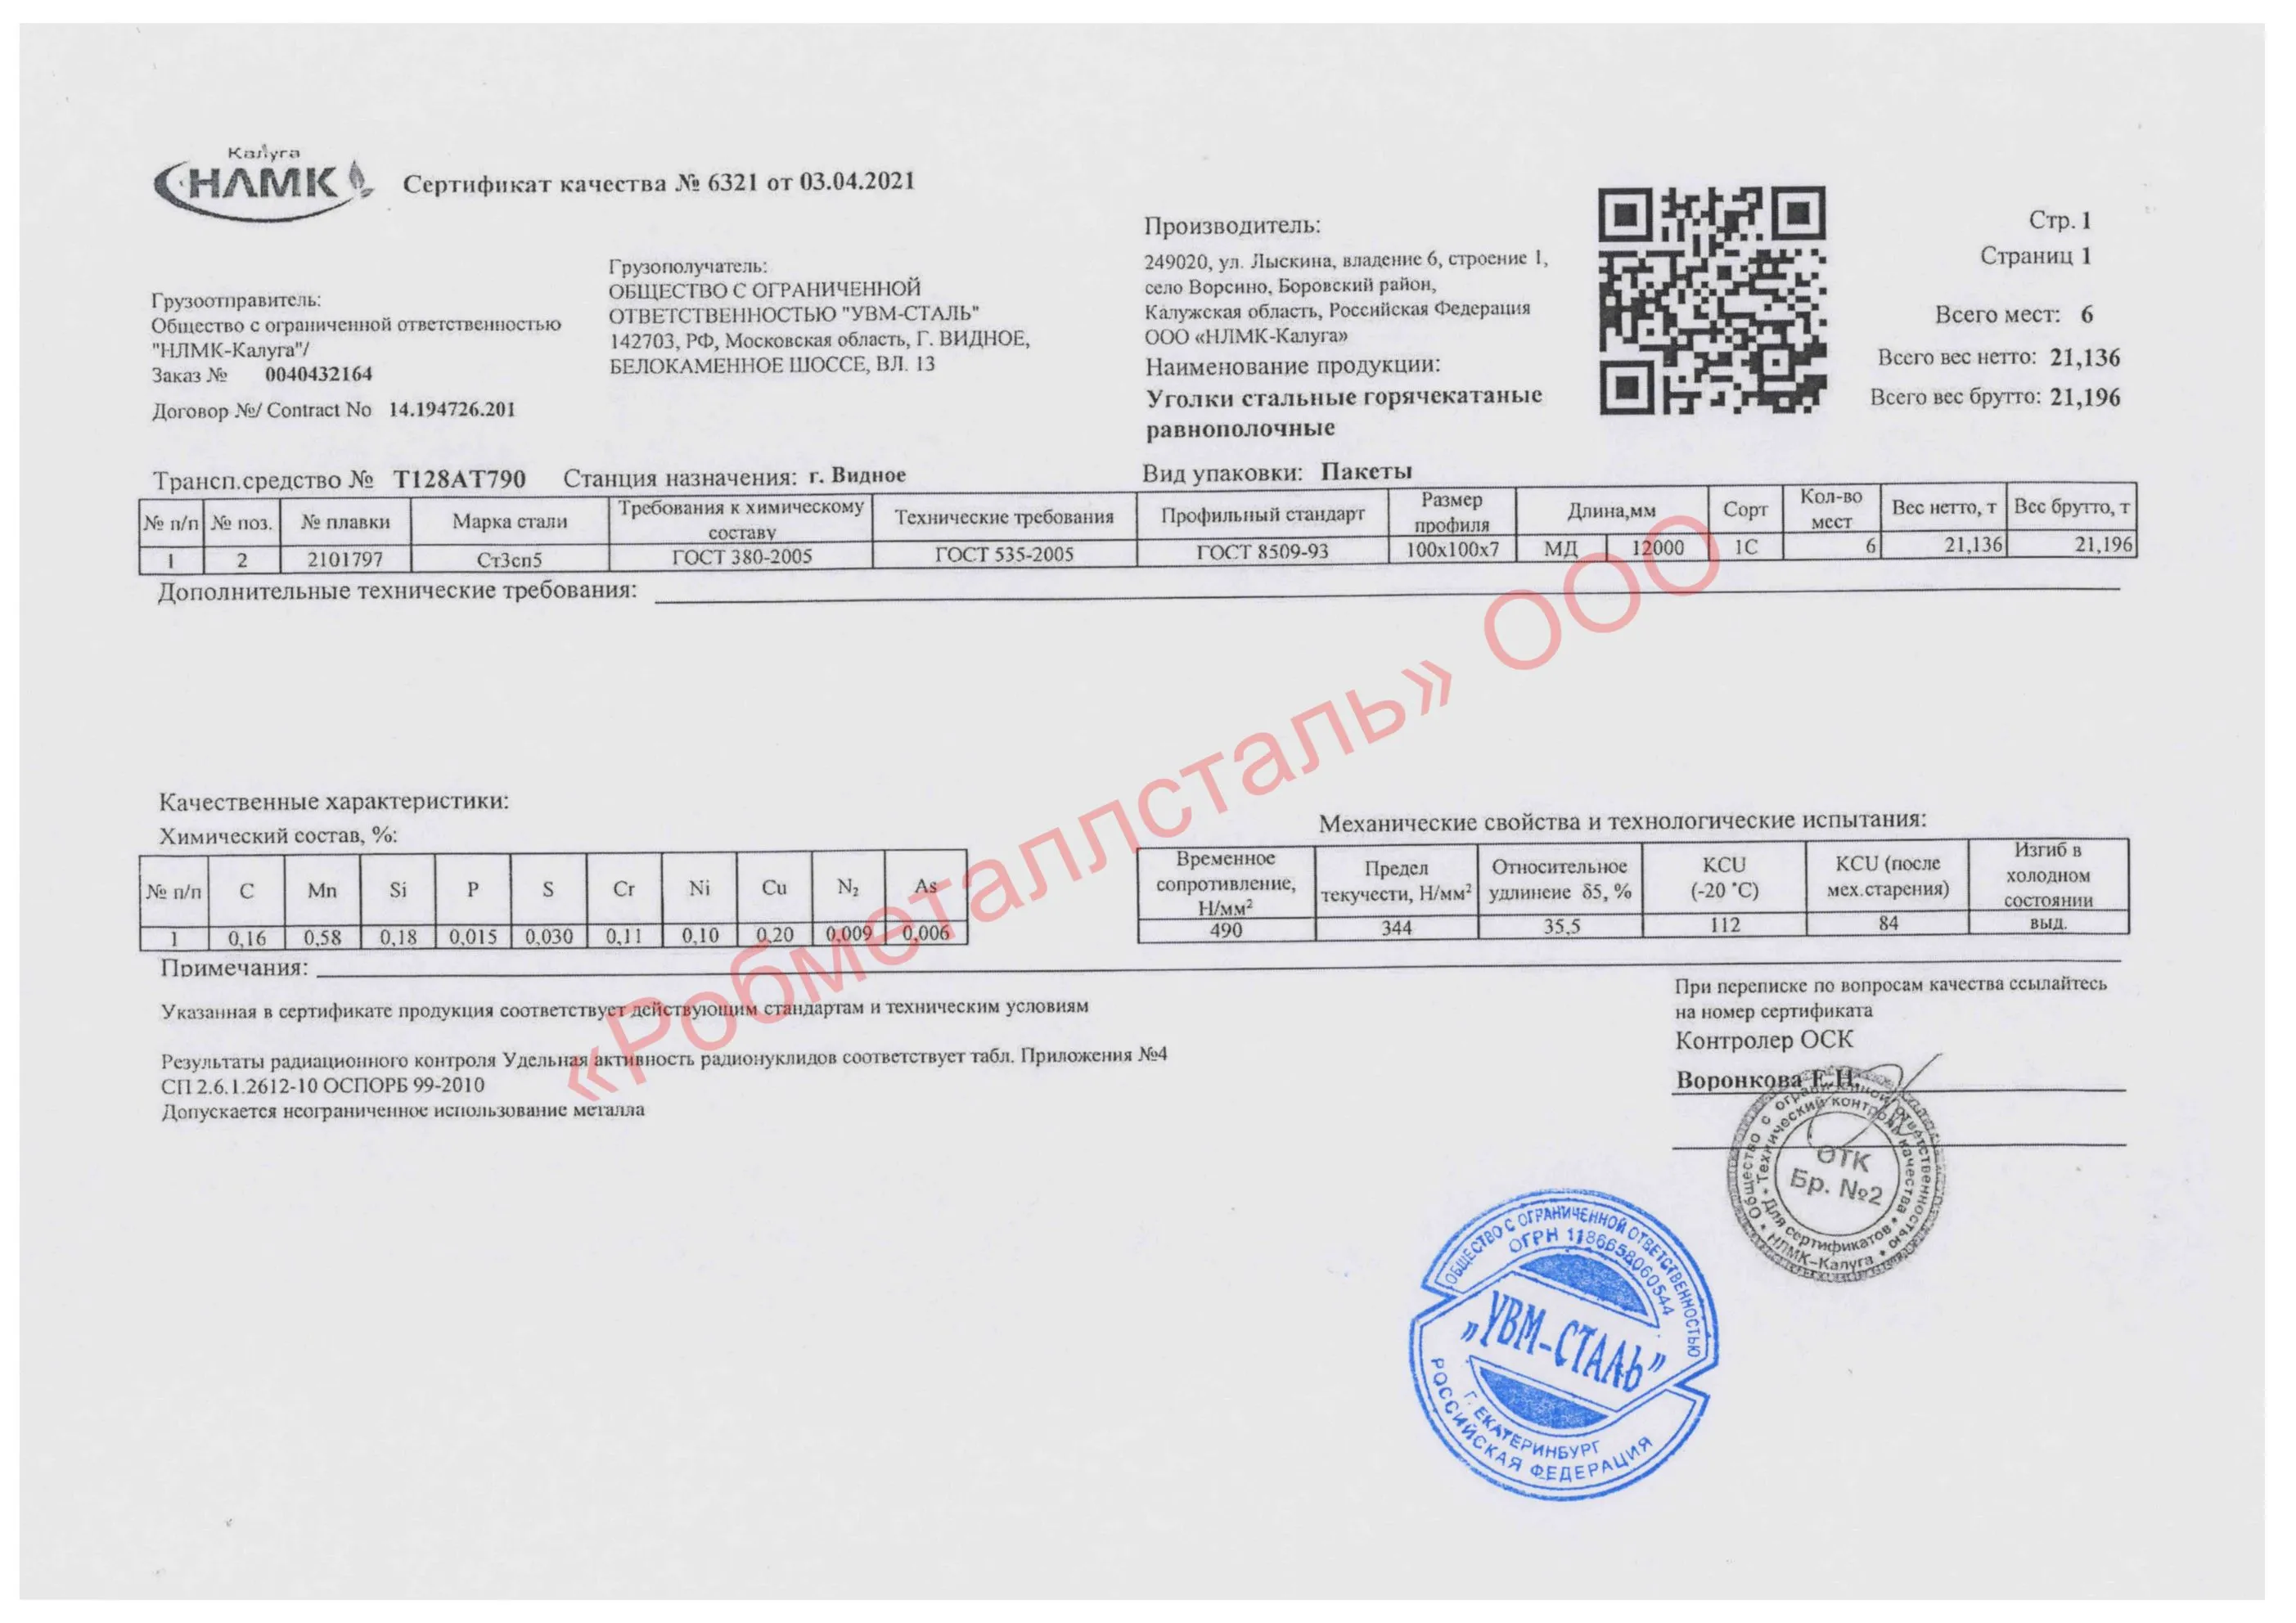 Сертификат на Уголок 100x100x7 мм